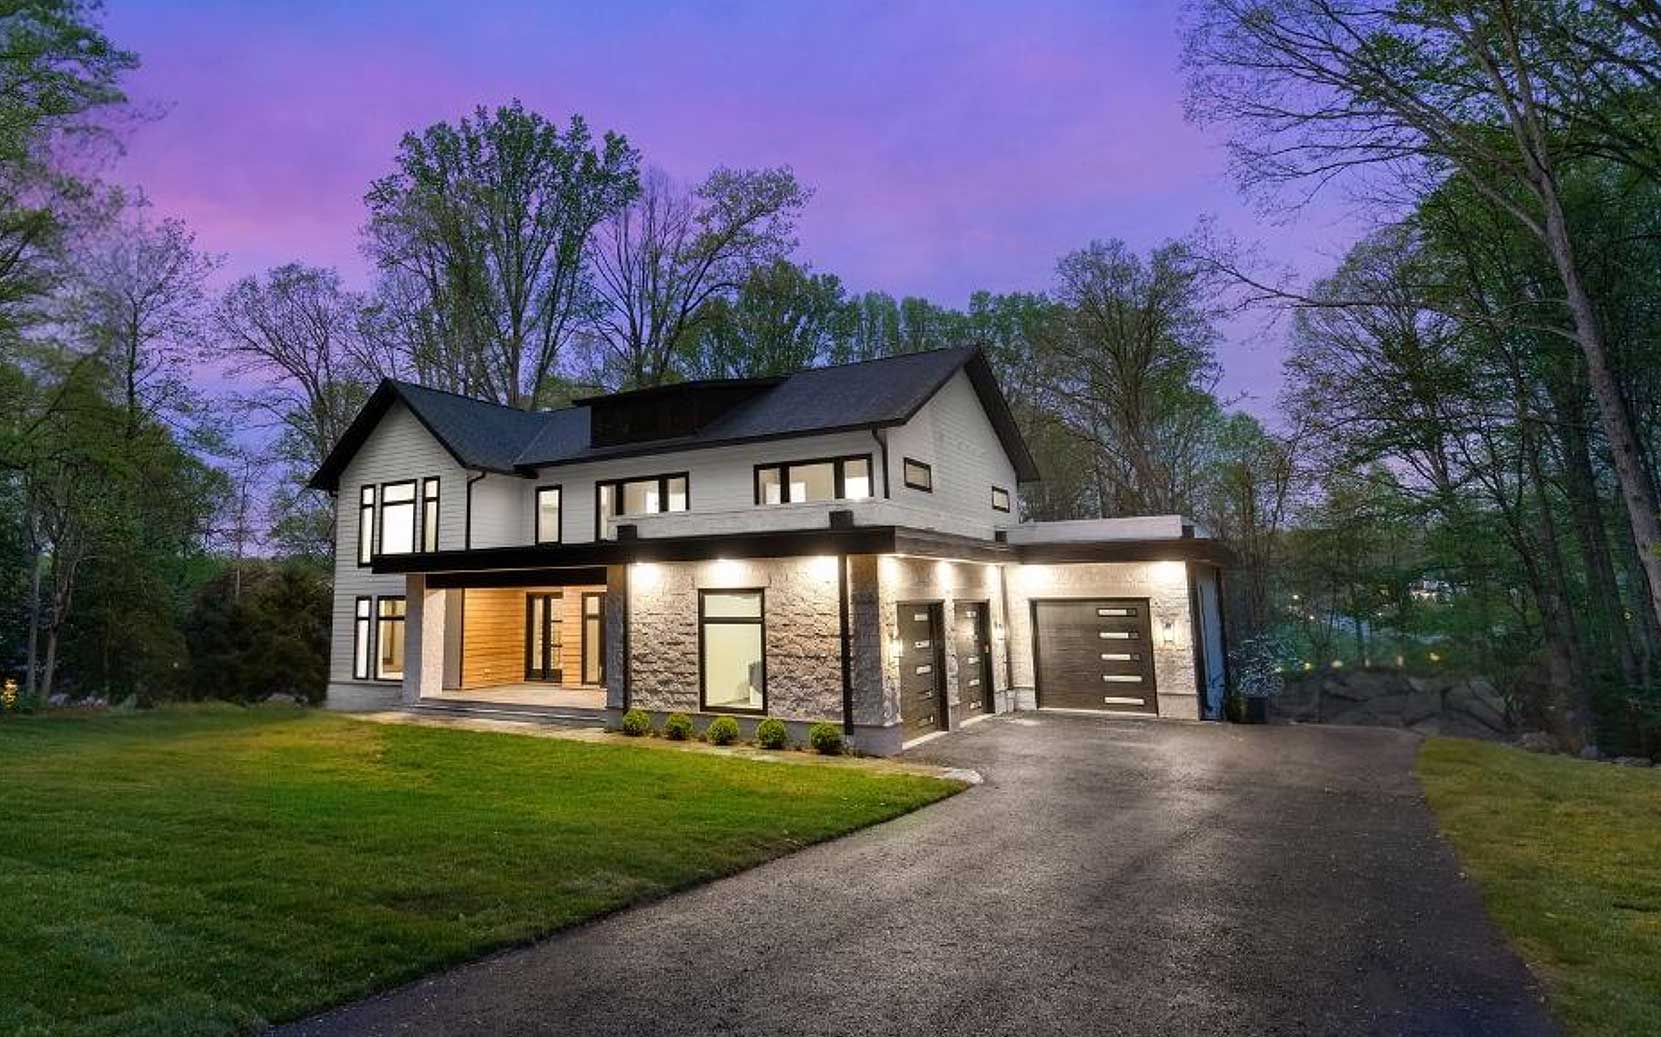 New-home-exterior-at-dusk-but-Paradigm-custom-home-builder